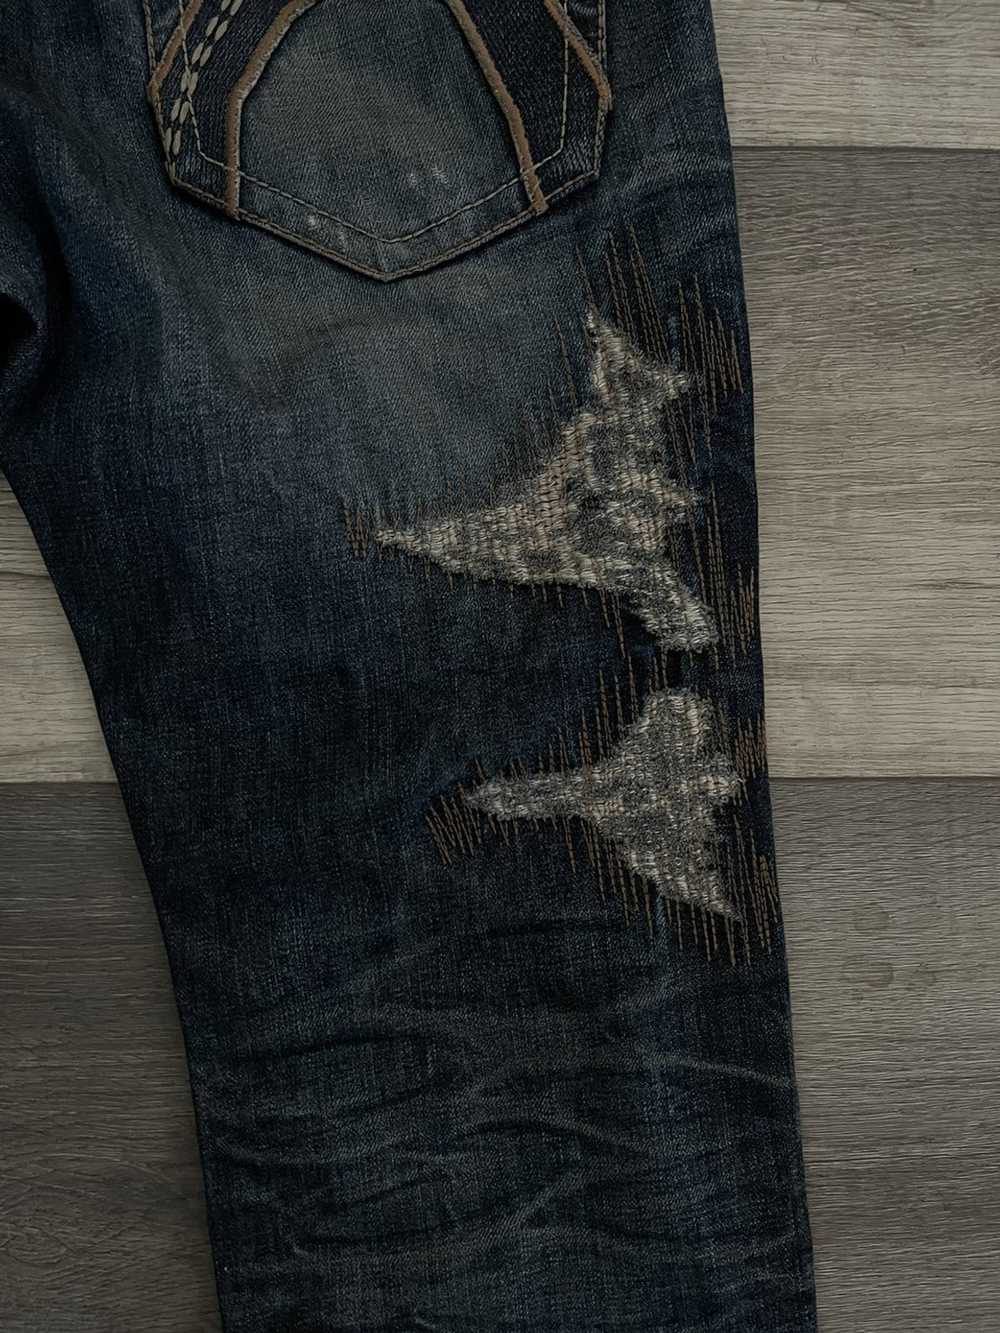 PPFM Buckaroo indigo jeans - image 6